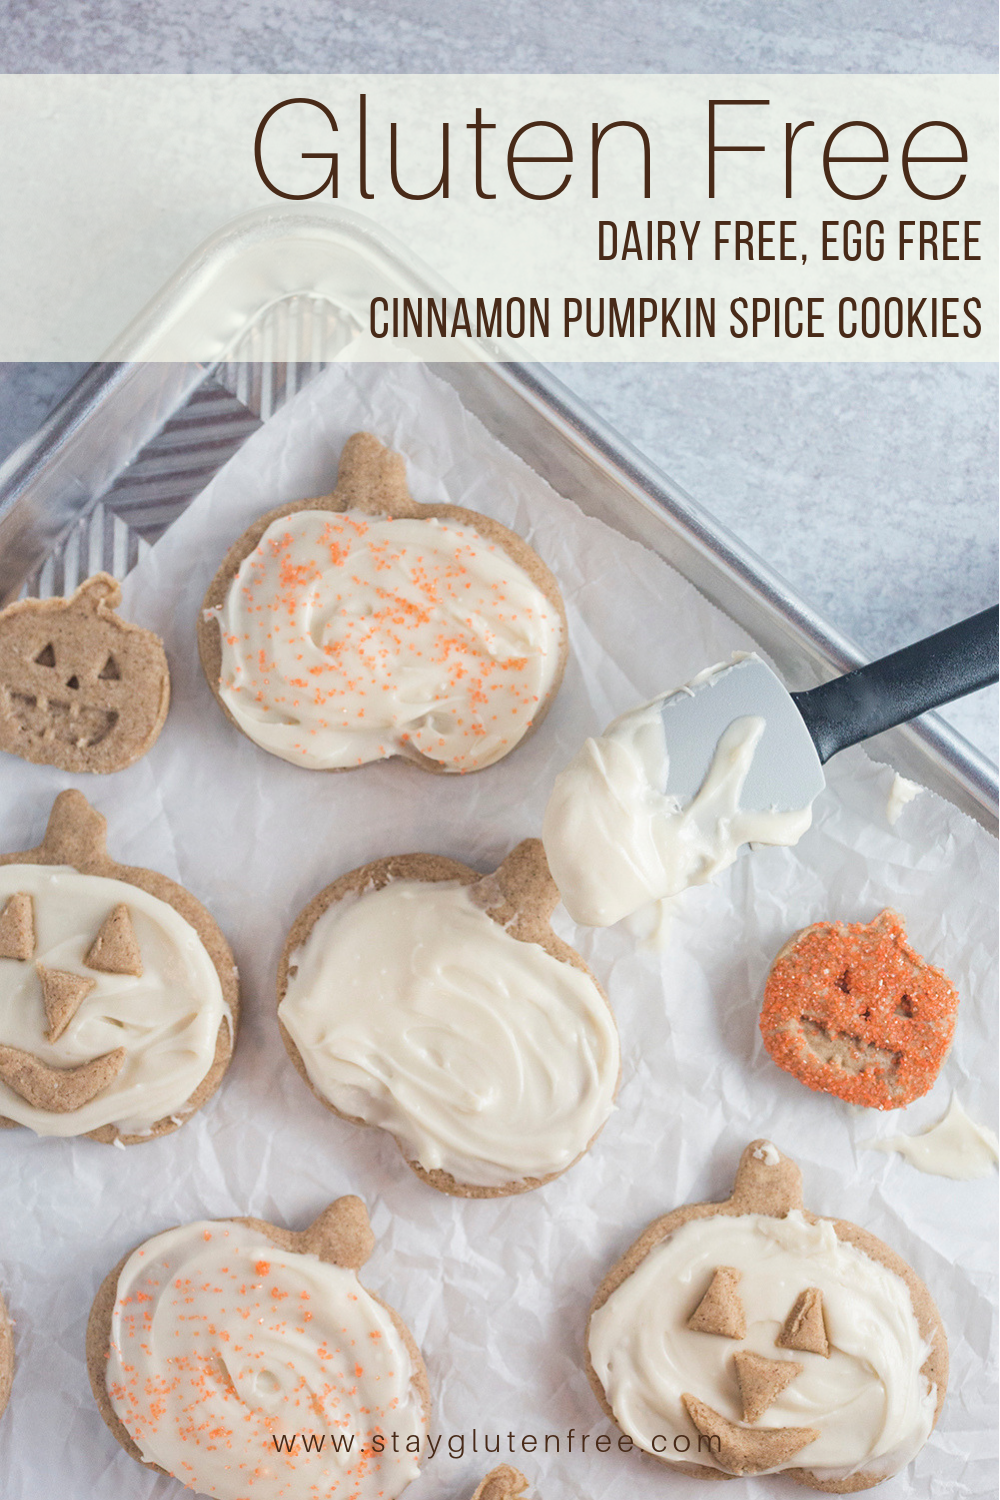 Cinnamon Pumpkin Spice Cookies